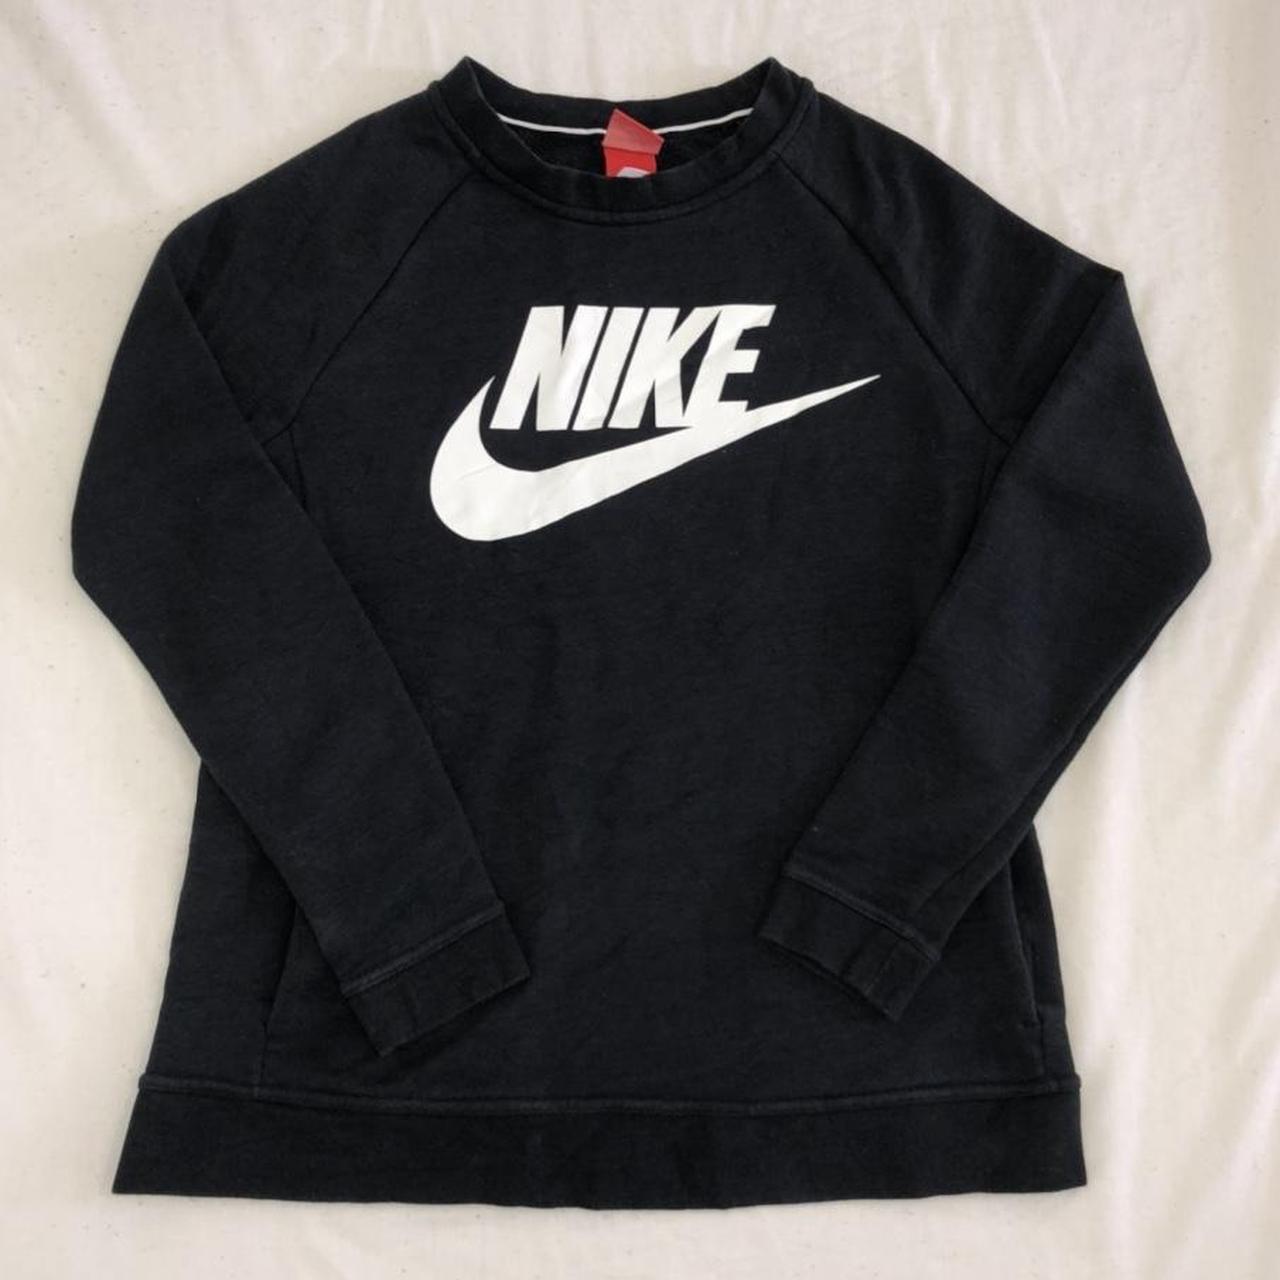 Nike Black Sweatshirt with Big Central Nike and... - Depop